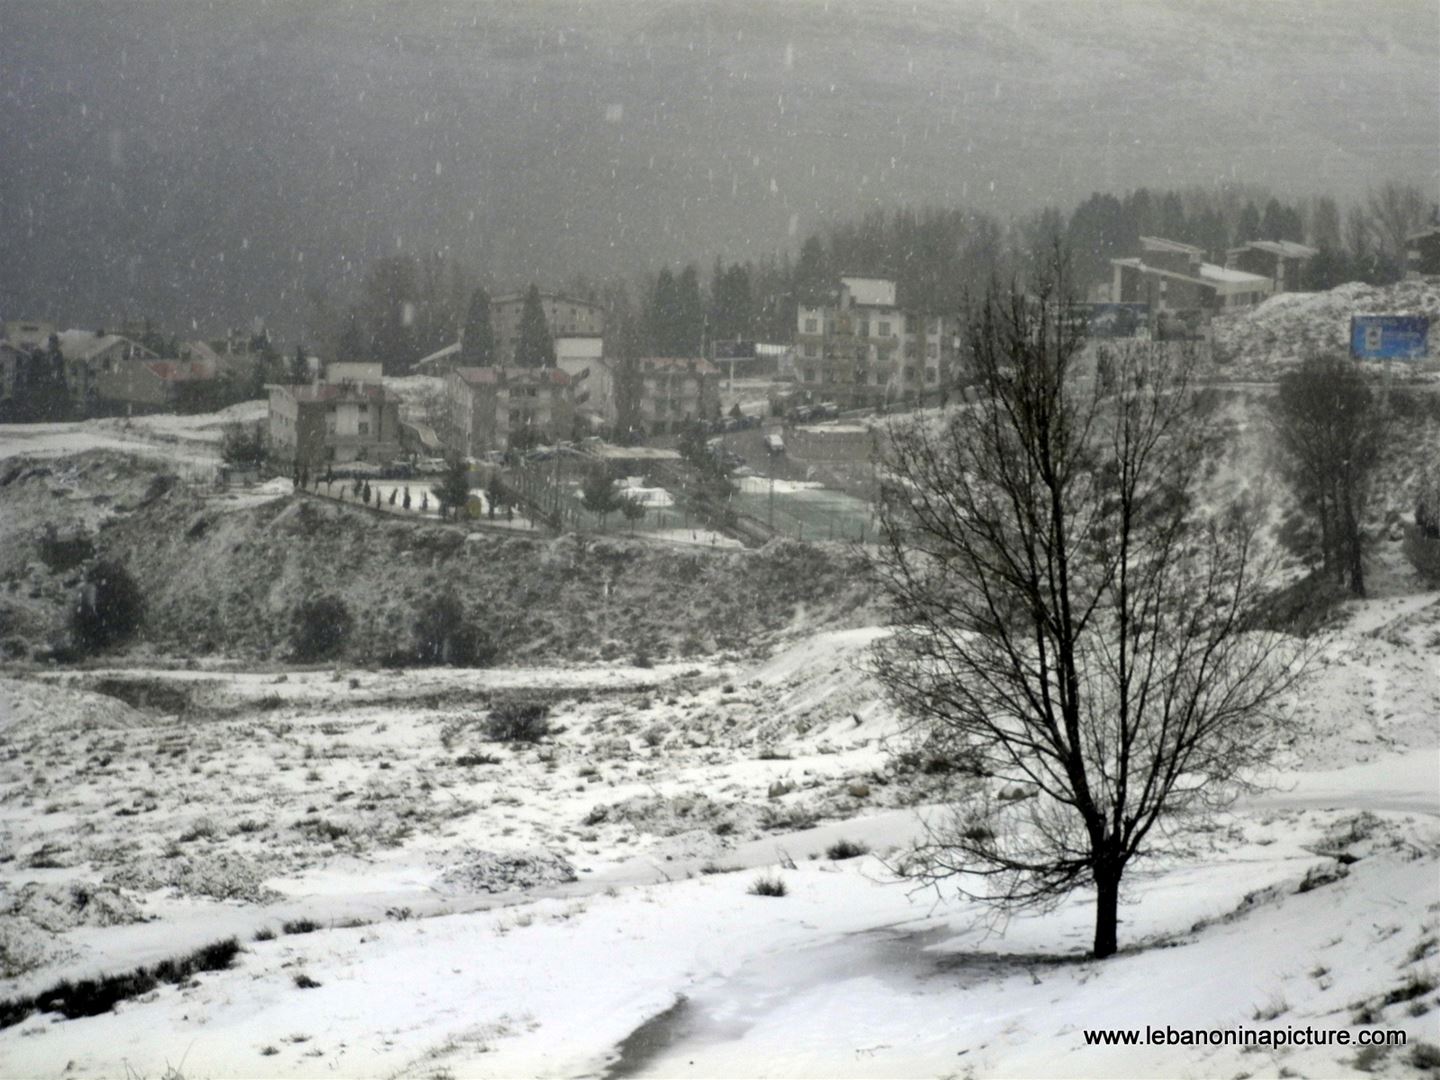 Snow in Faraya February 2011